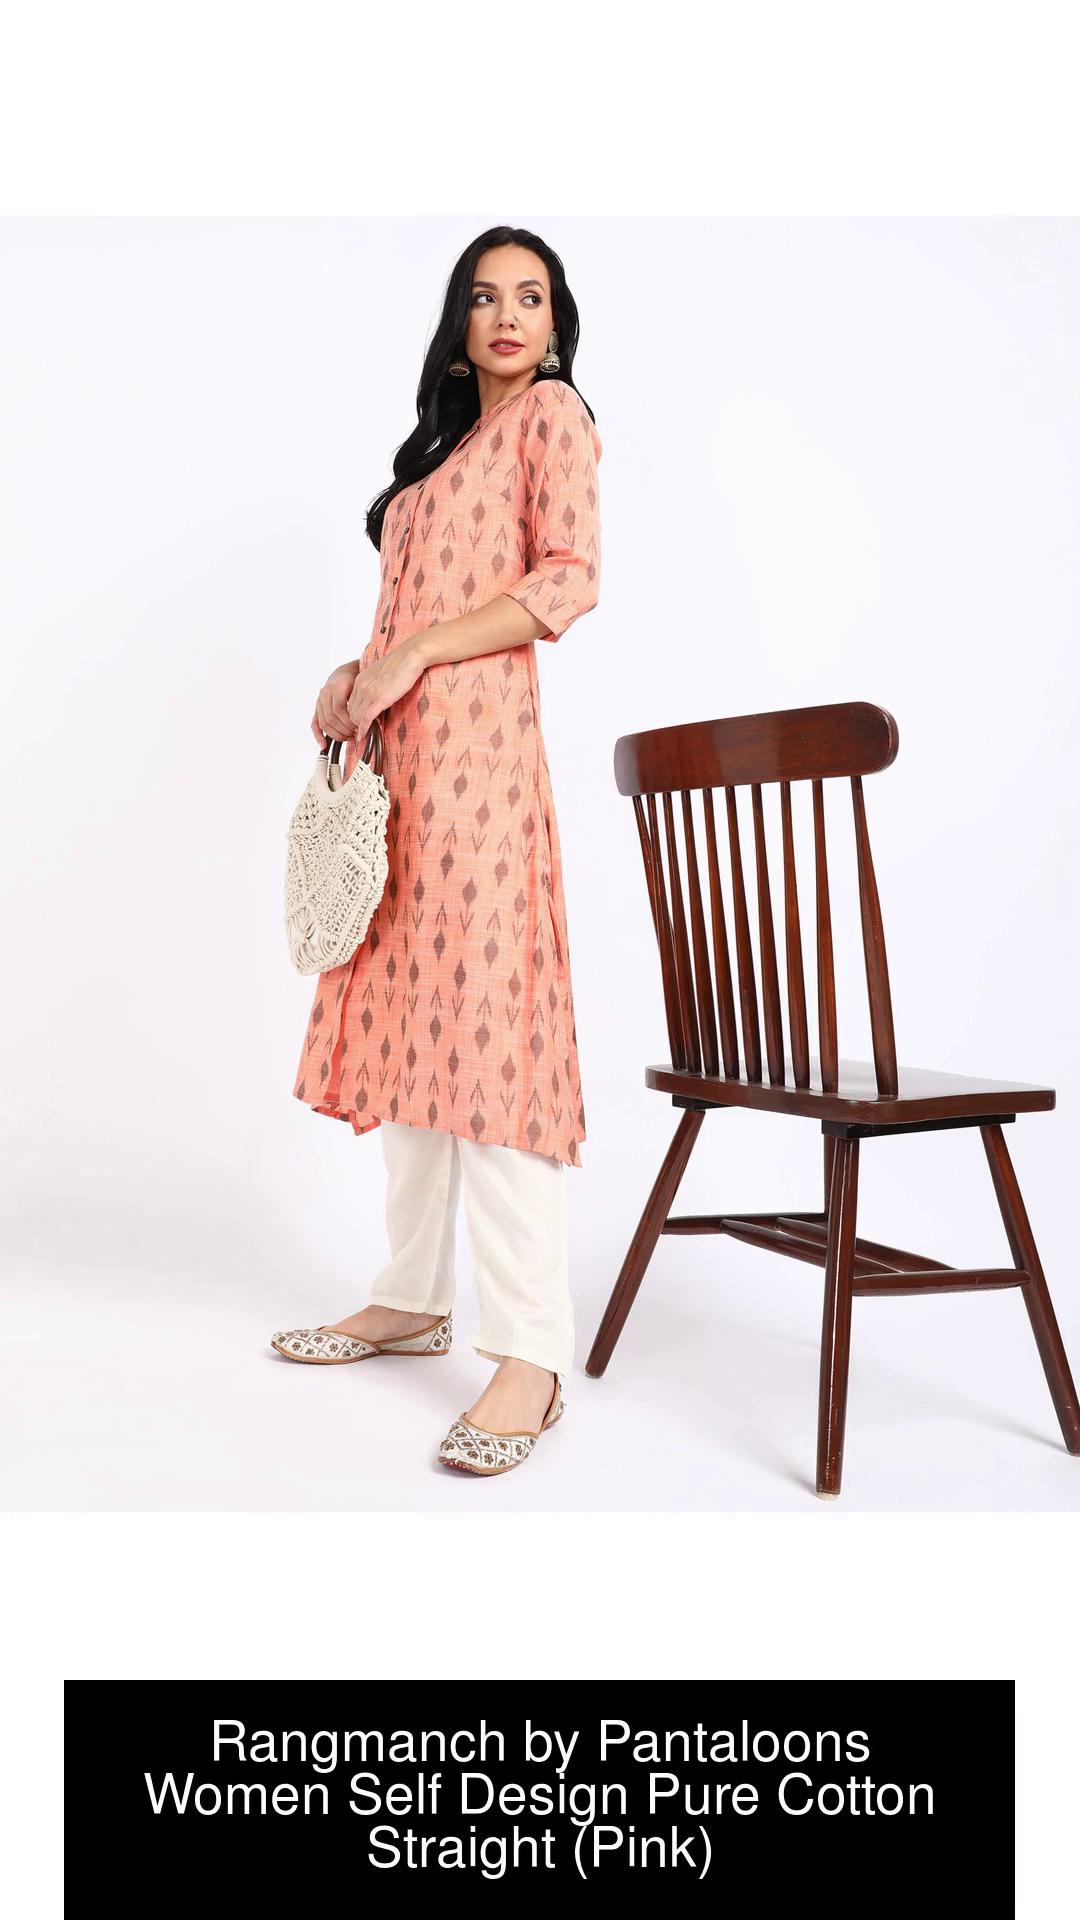 Buy Rangmanch by Pantaloons Women's Cotton Regular Kurta at